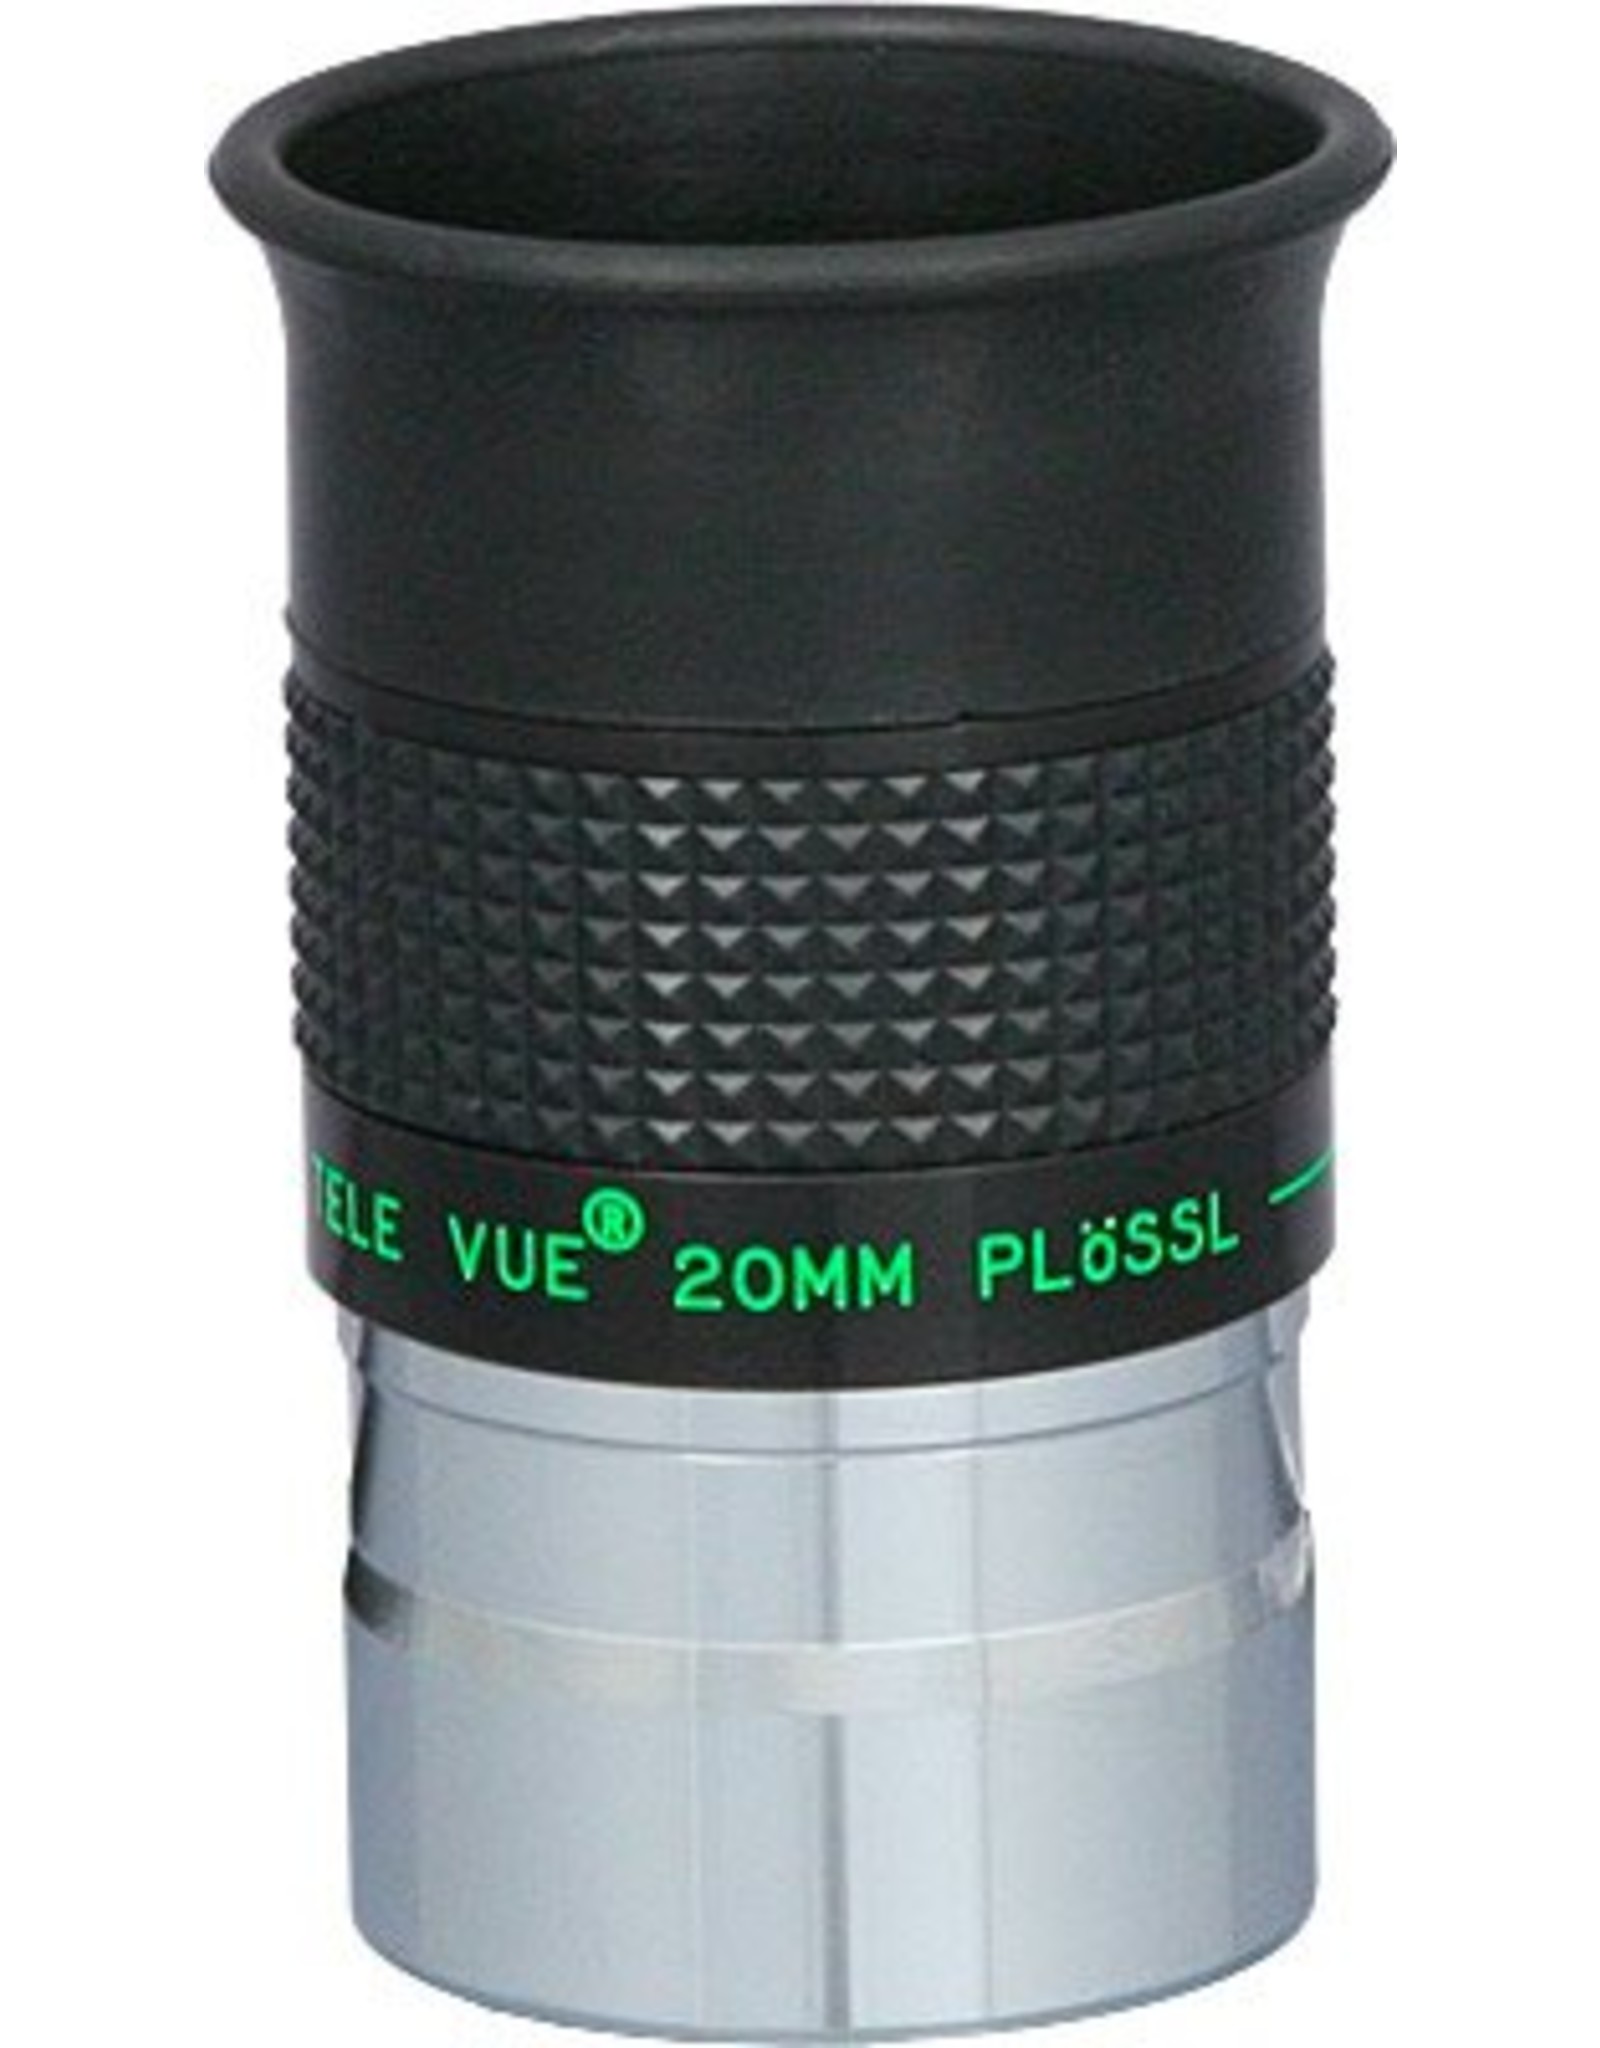 Tele Vue 20mm Plossl Eyepiece - 1.25